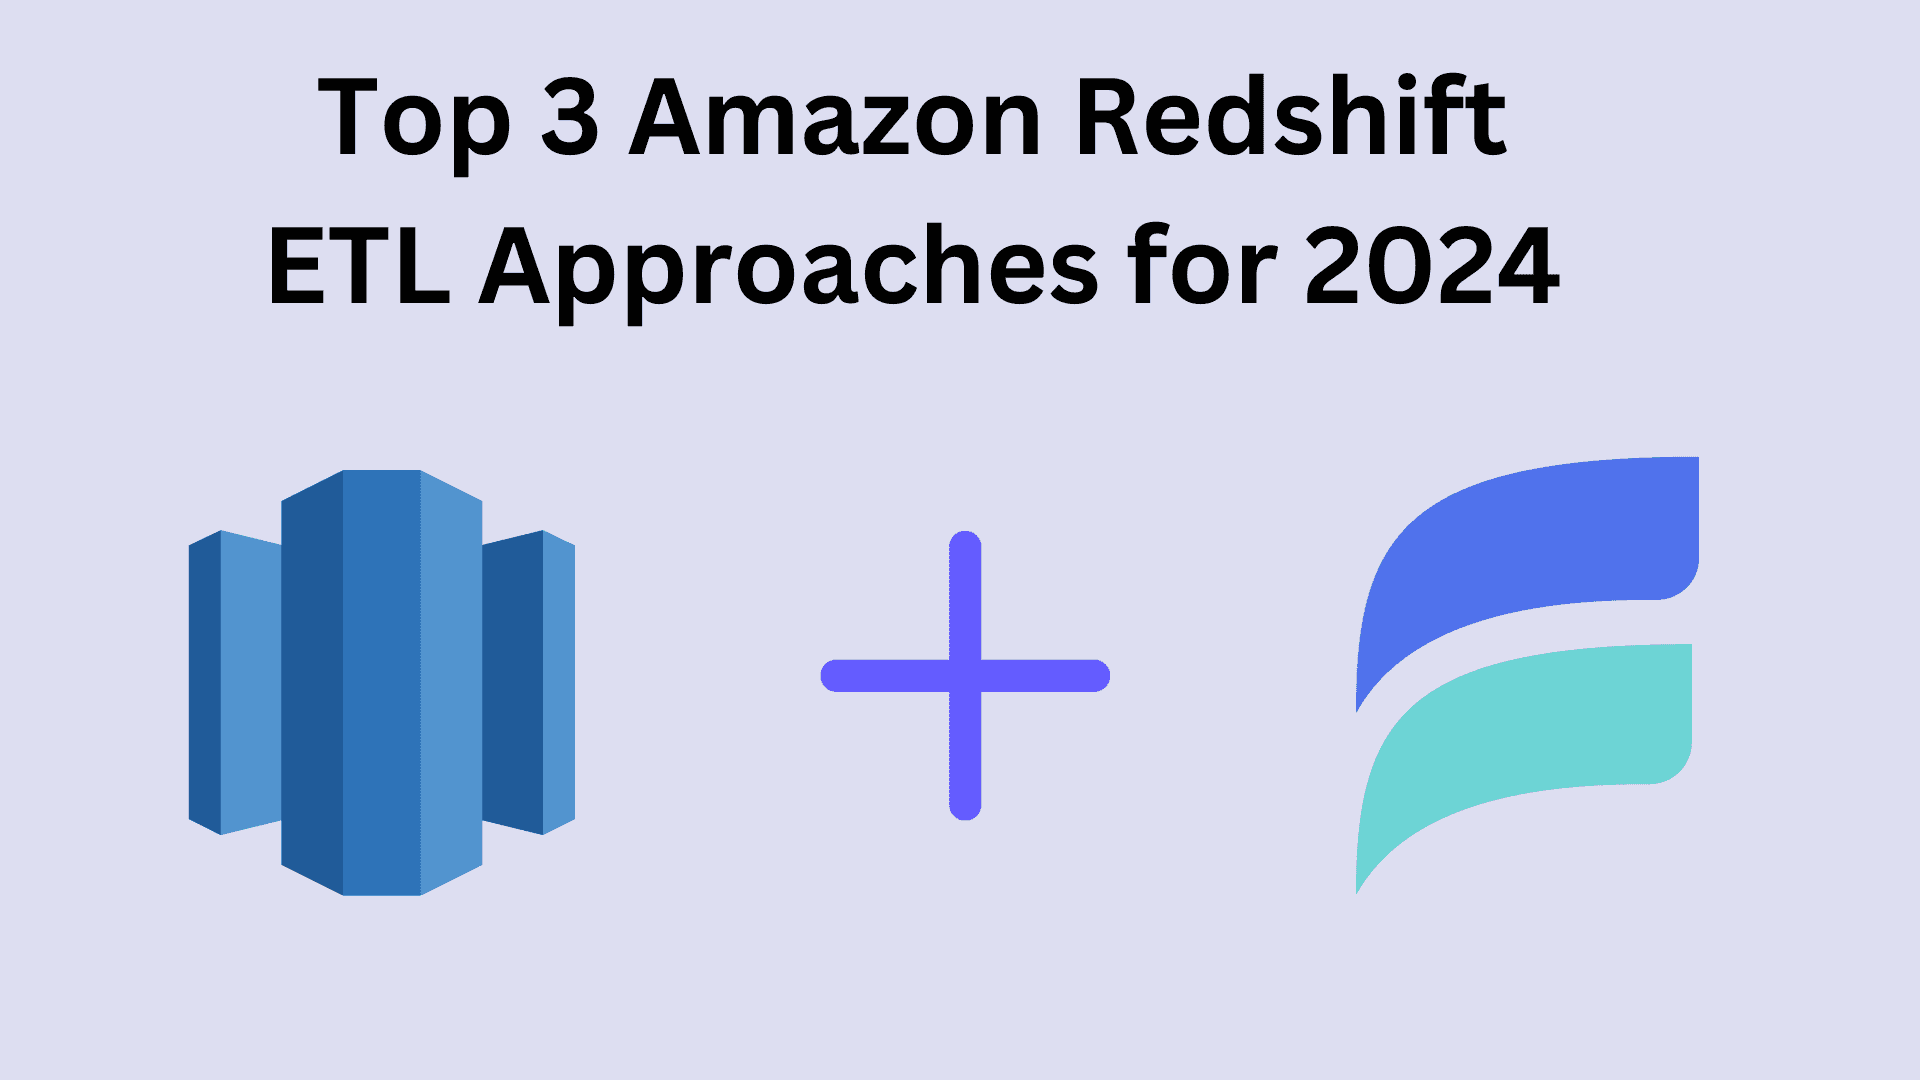 Amazon Redshift ETL – Top 3 ETL Approaches for 2024